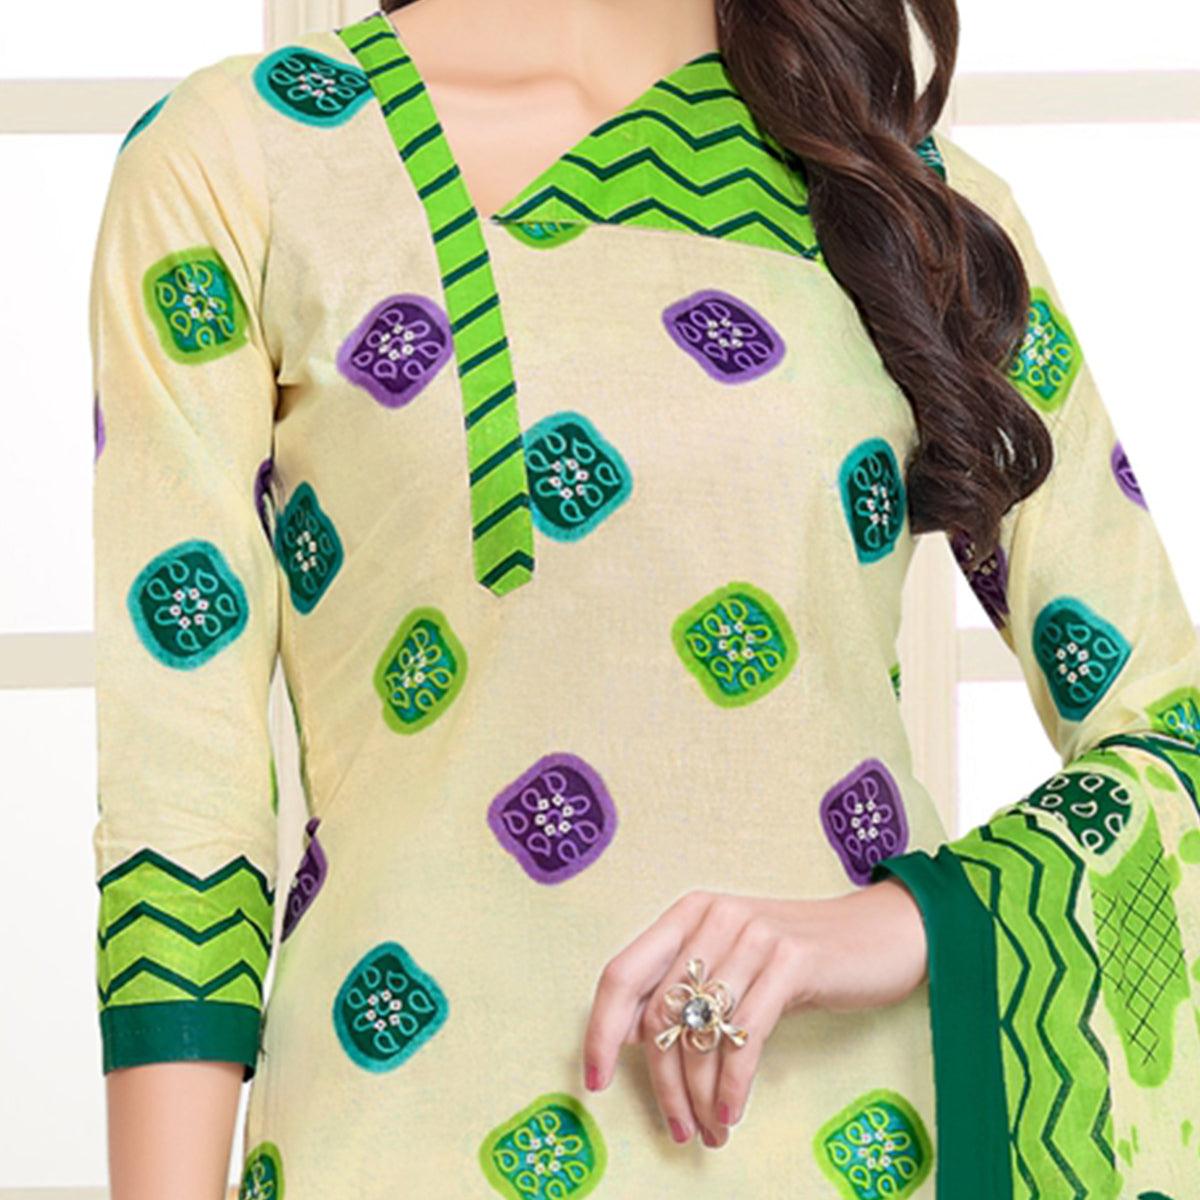 Delightful Cream-Green Colored Casual Wear Printed Cotton Patiala Dress Material - Peachmode